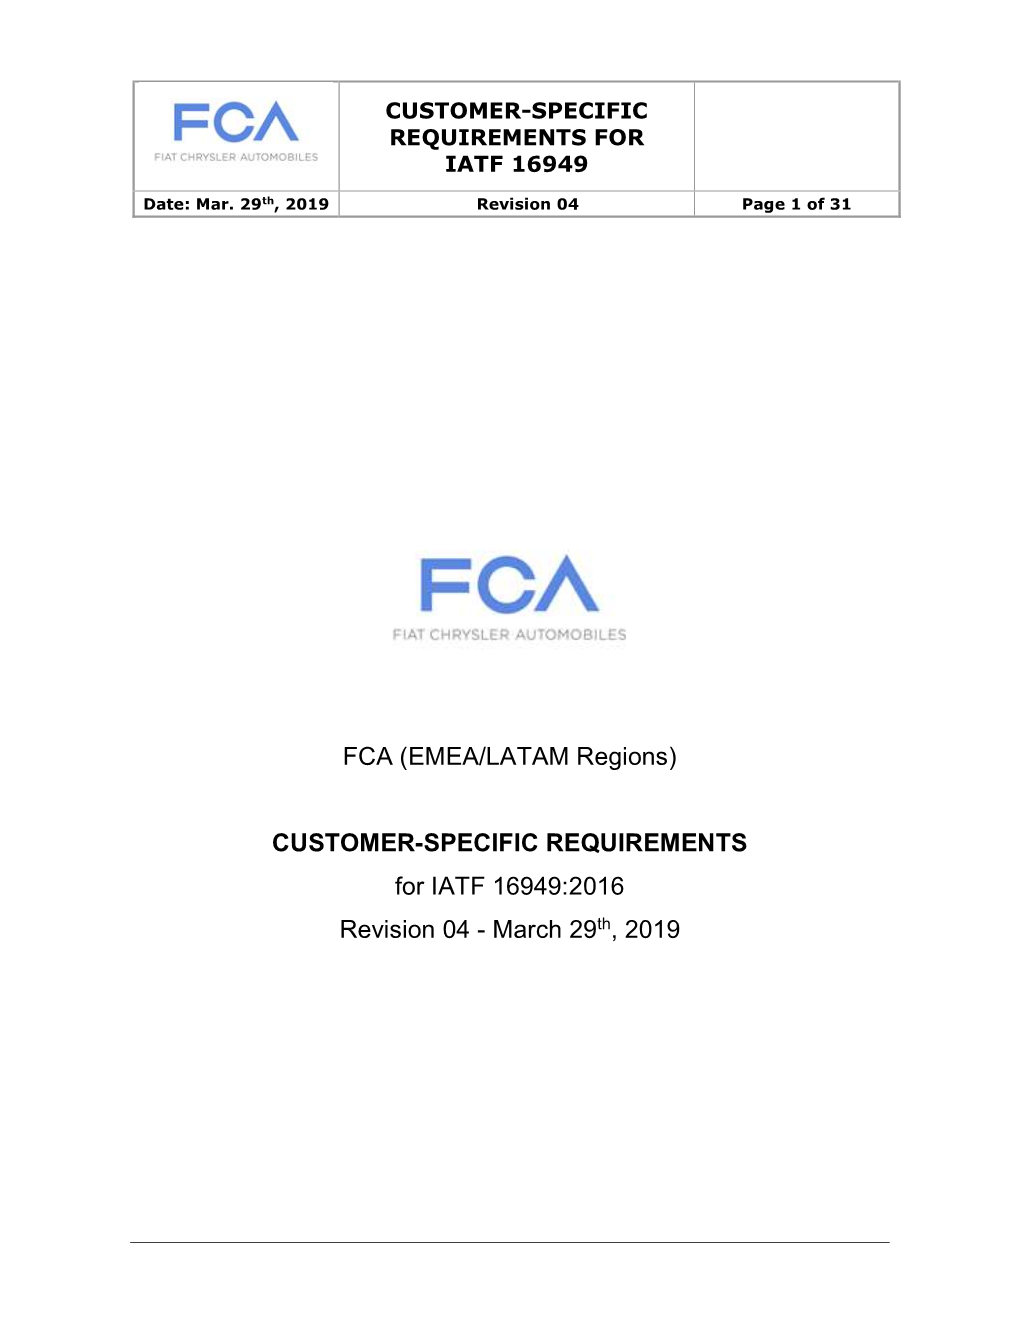 FCA EMEA/LATAM Regions Customer Specific Requirements for IATF 16949:2016